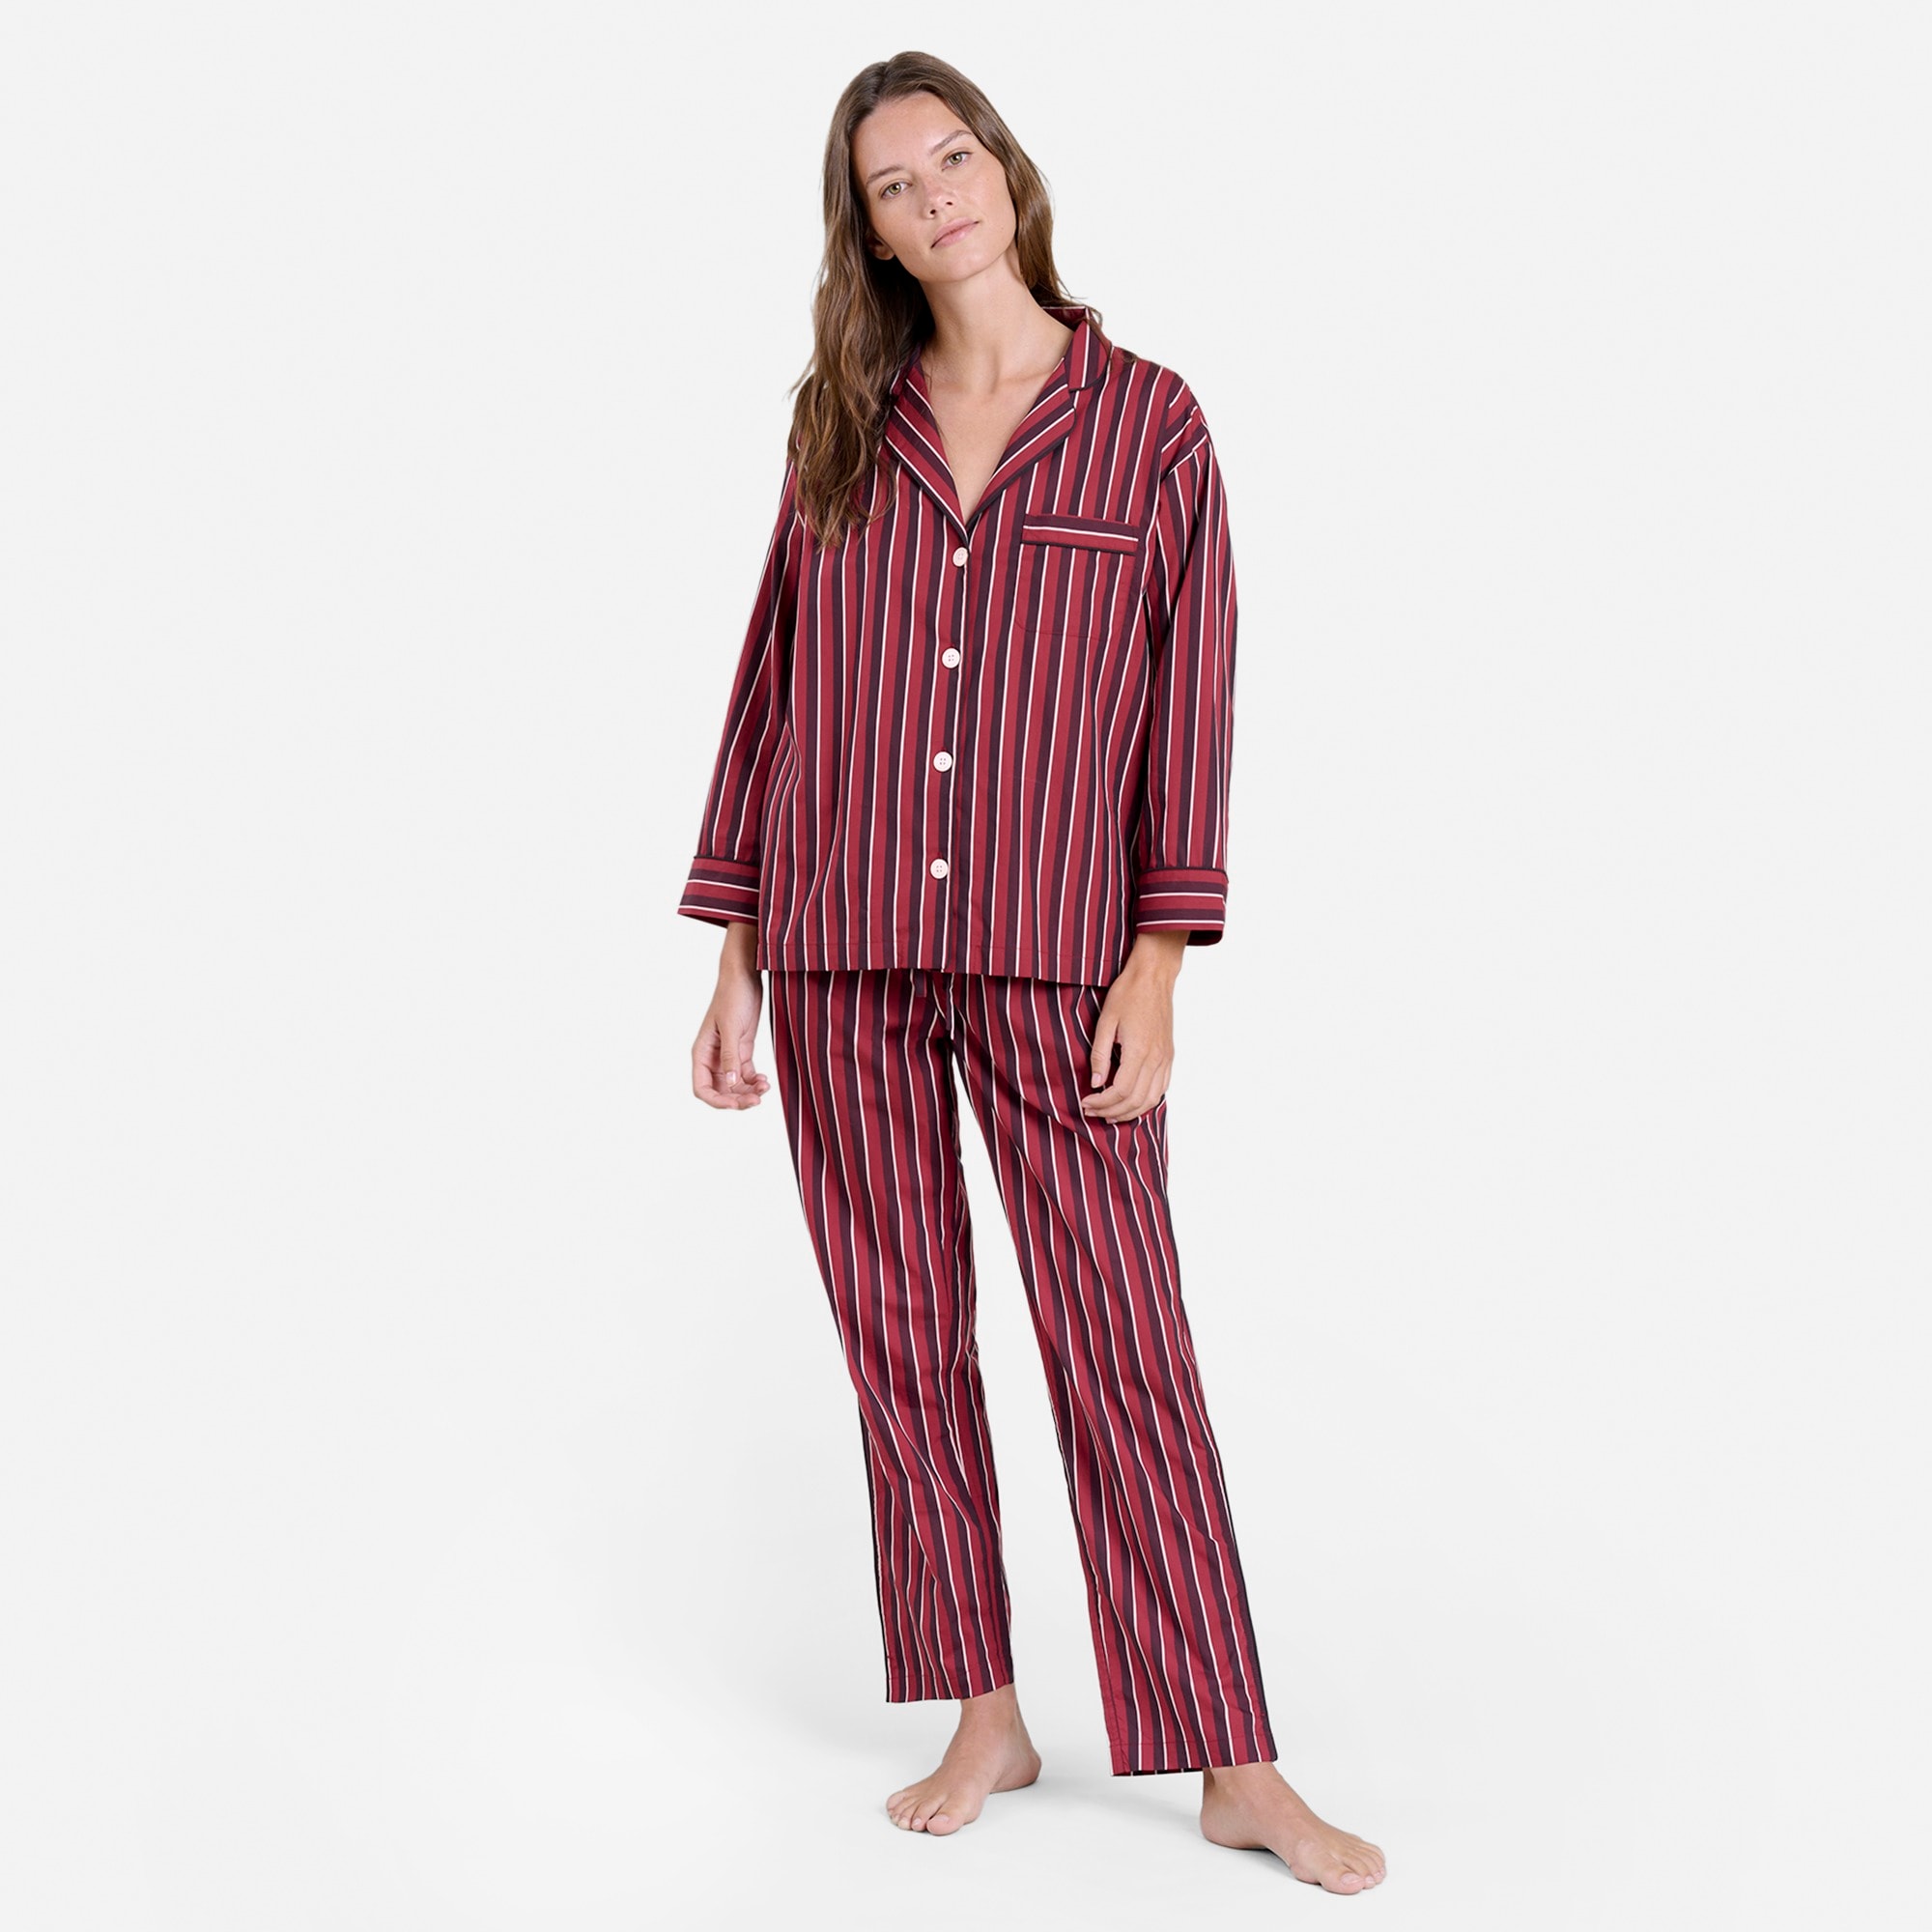  Sleepy Jones women's Marina pajama set in shadow stripe